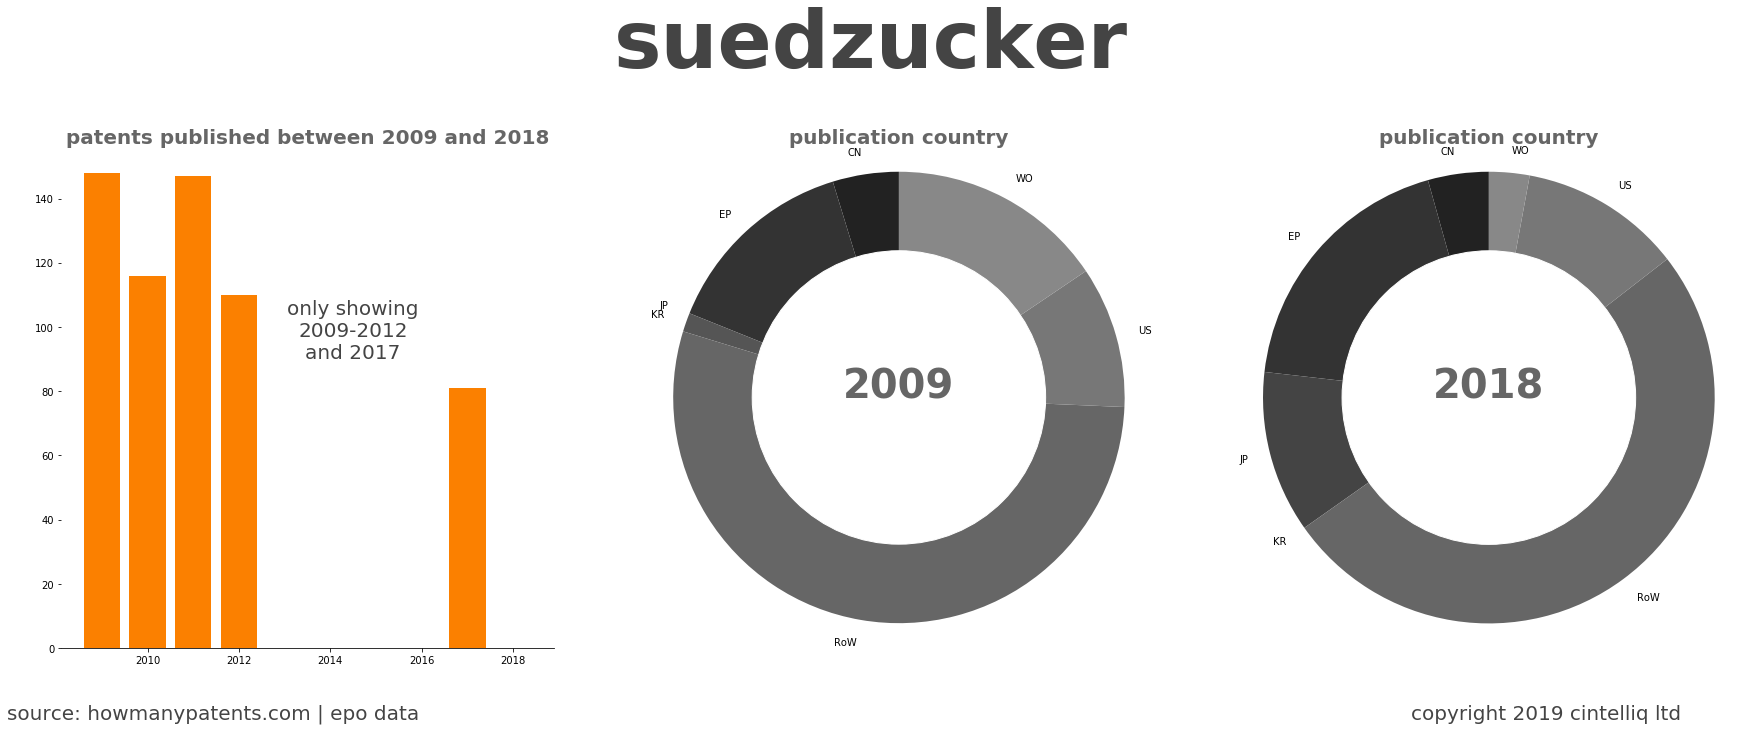 summary of patents for Suedzucker